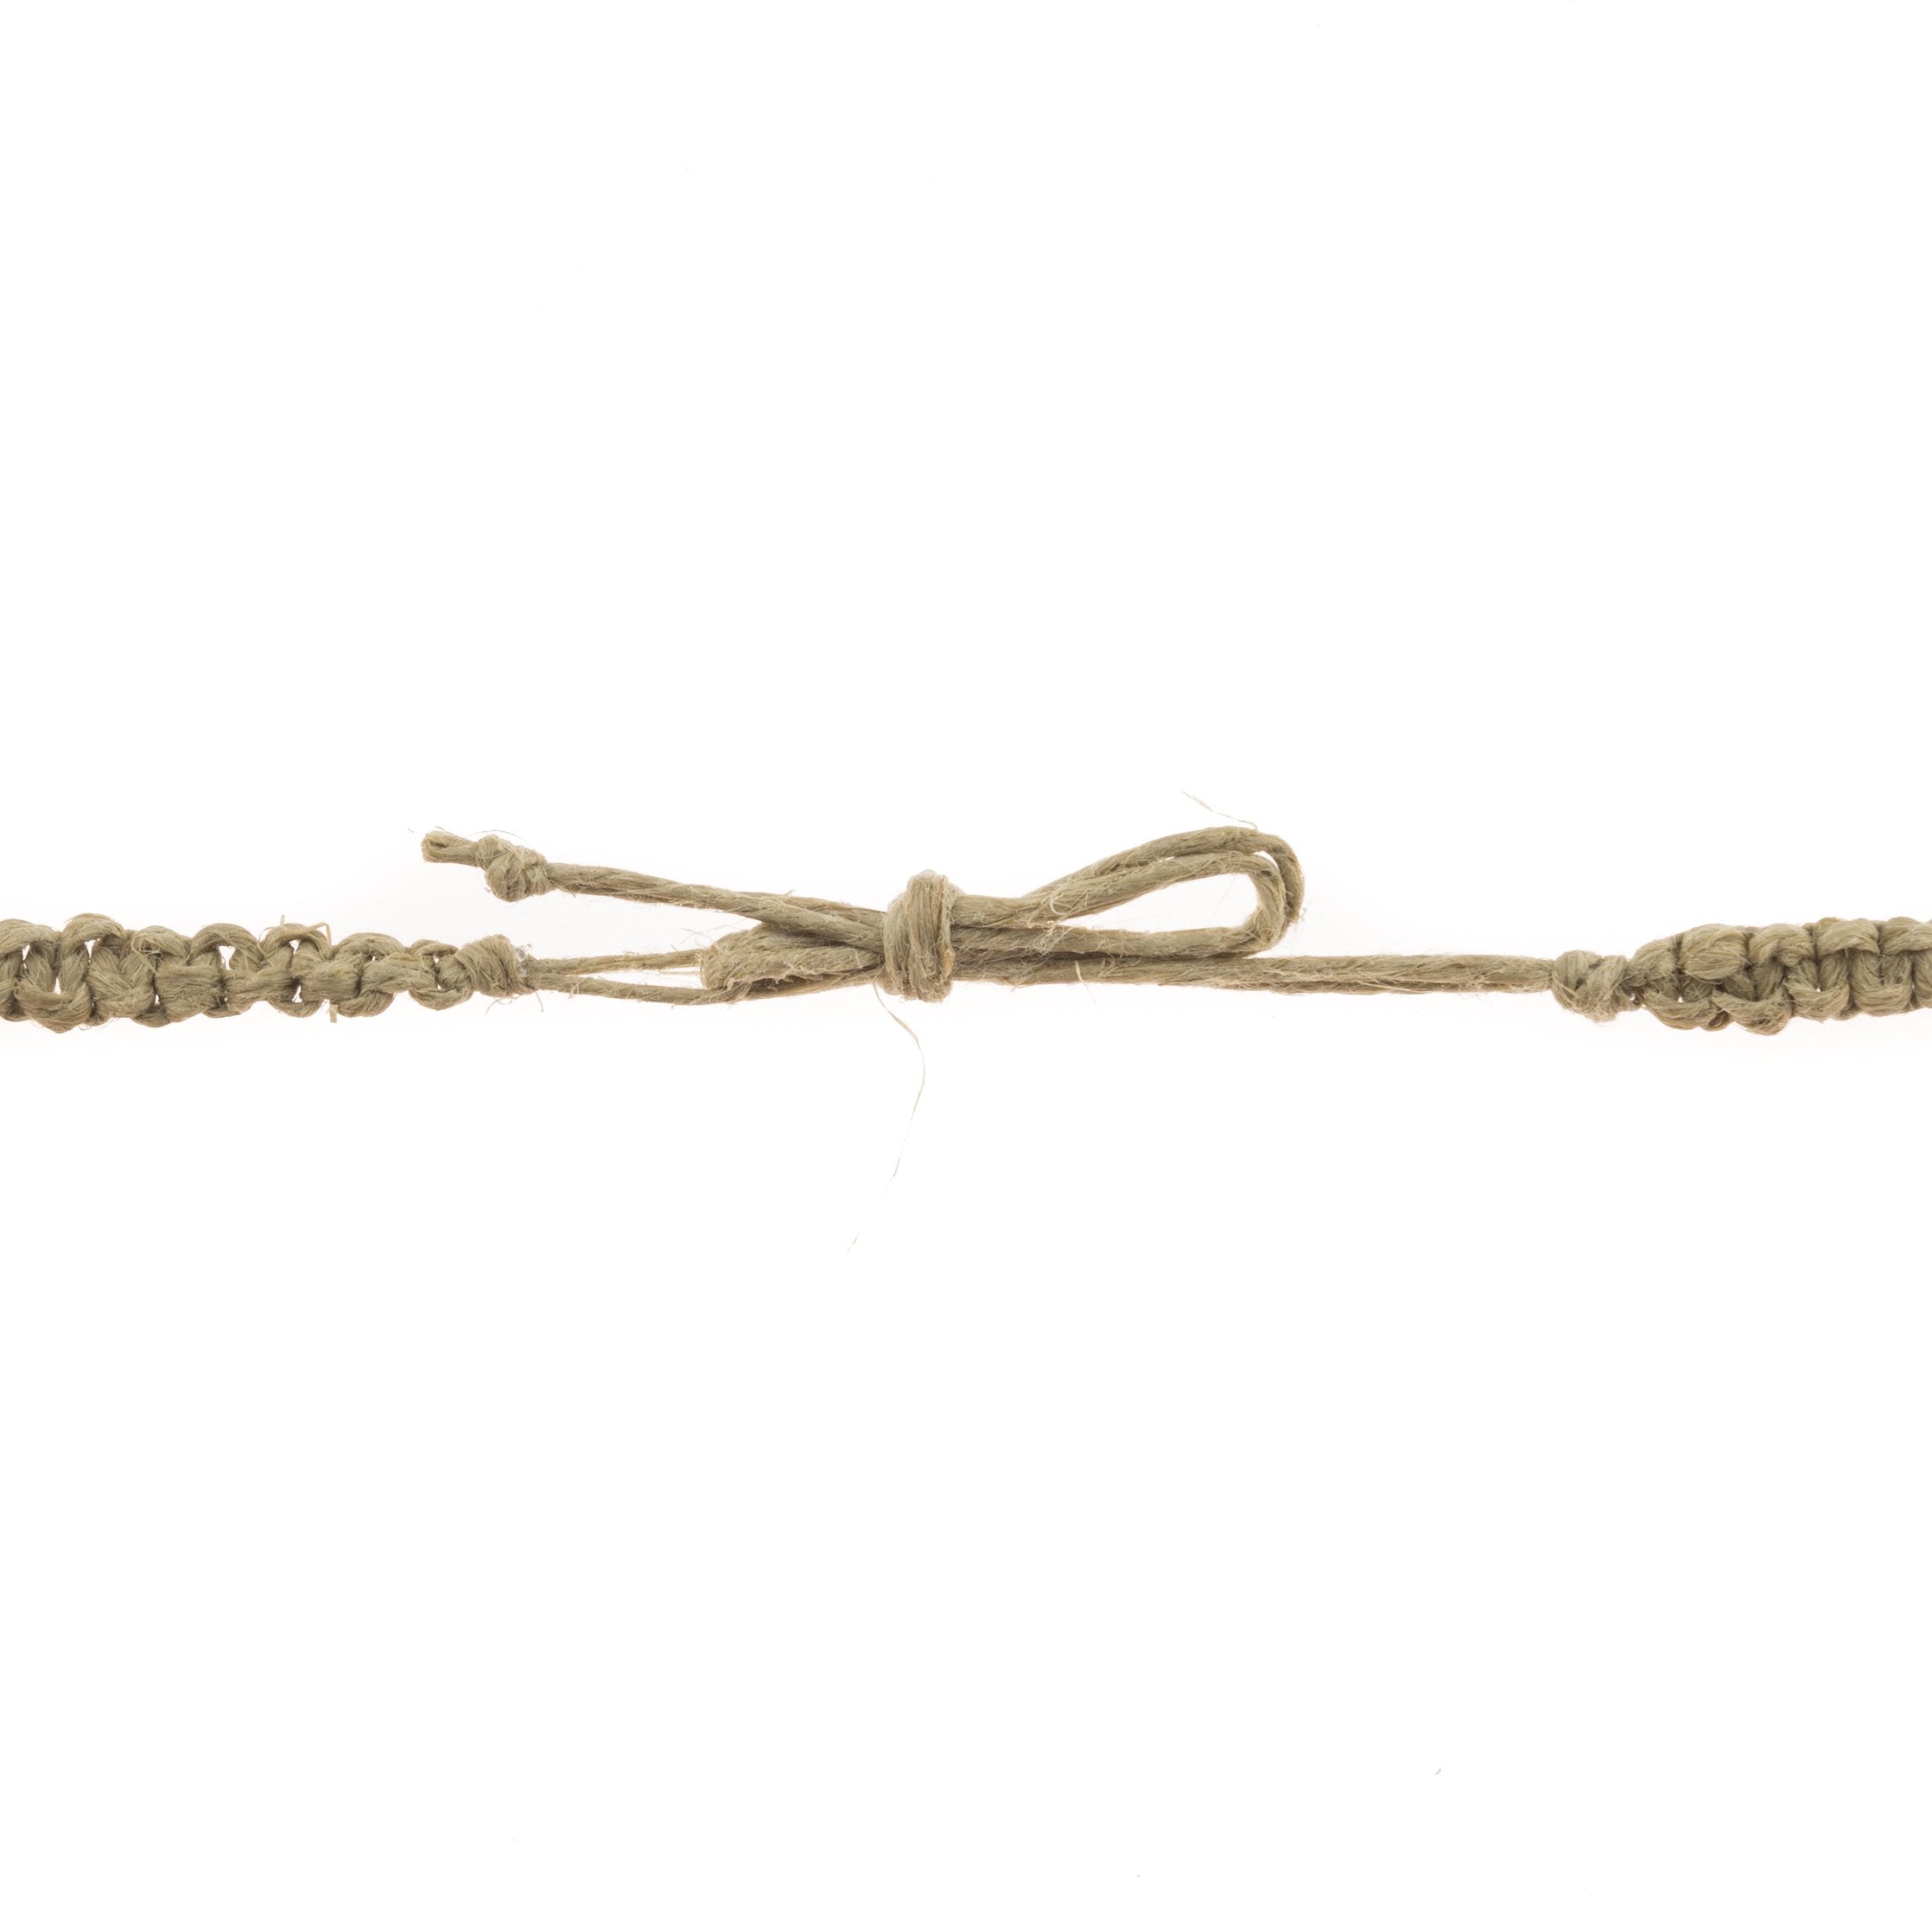 Cowrie and Puka Shell Beads on Hemp Choker Necklace